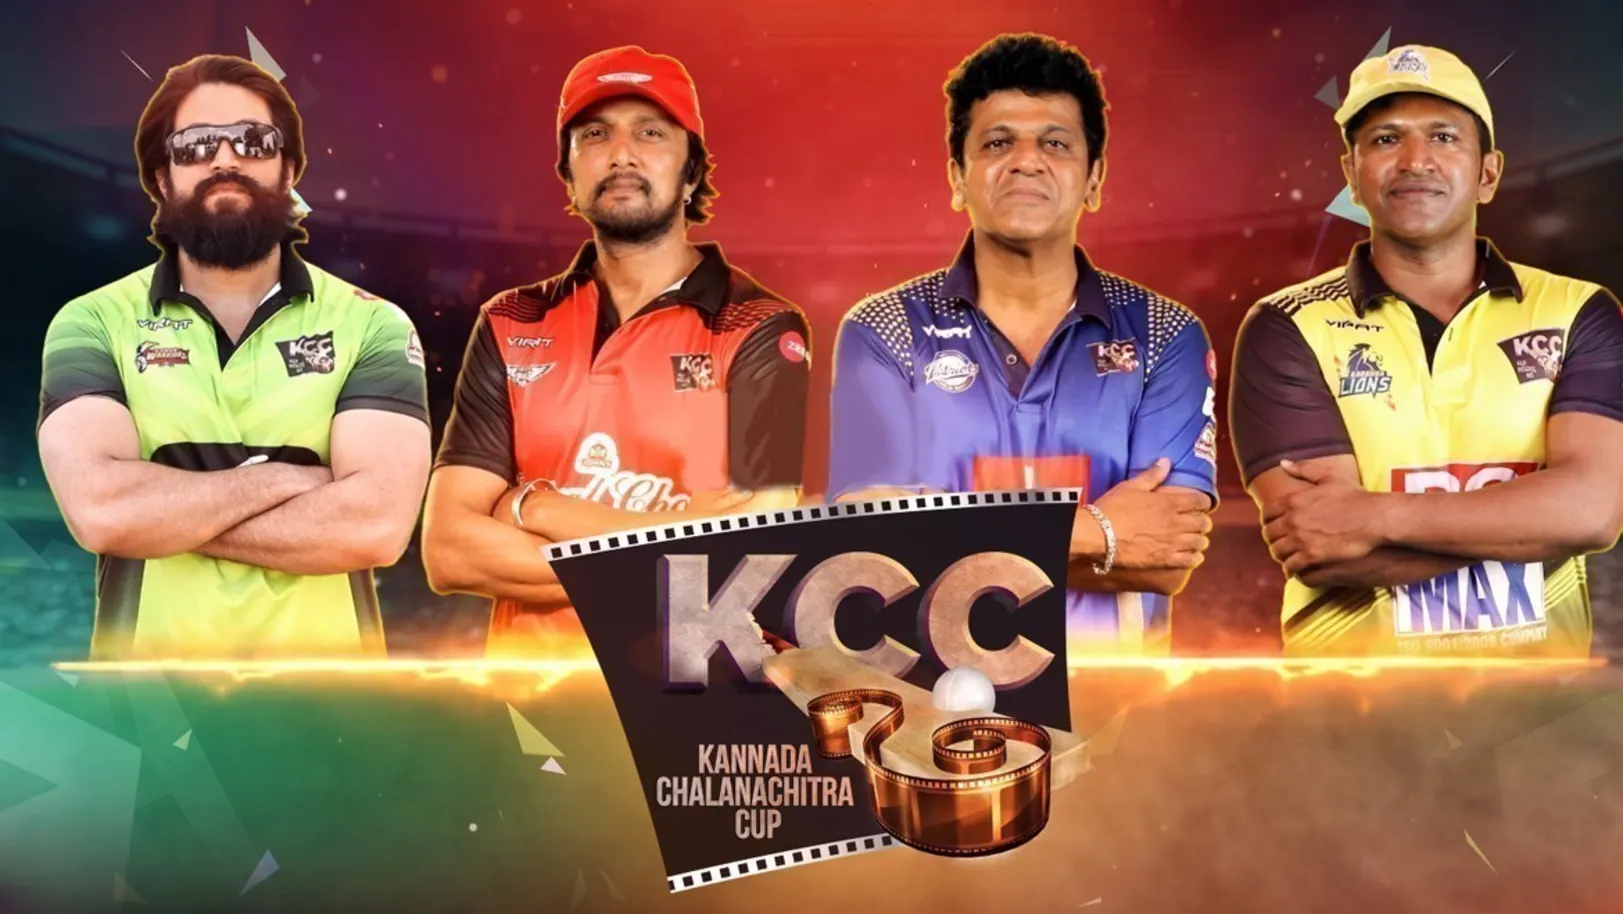 Kannada Chalanachitra Cup - Cricket League TV Show